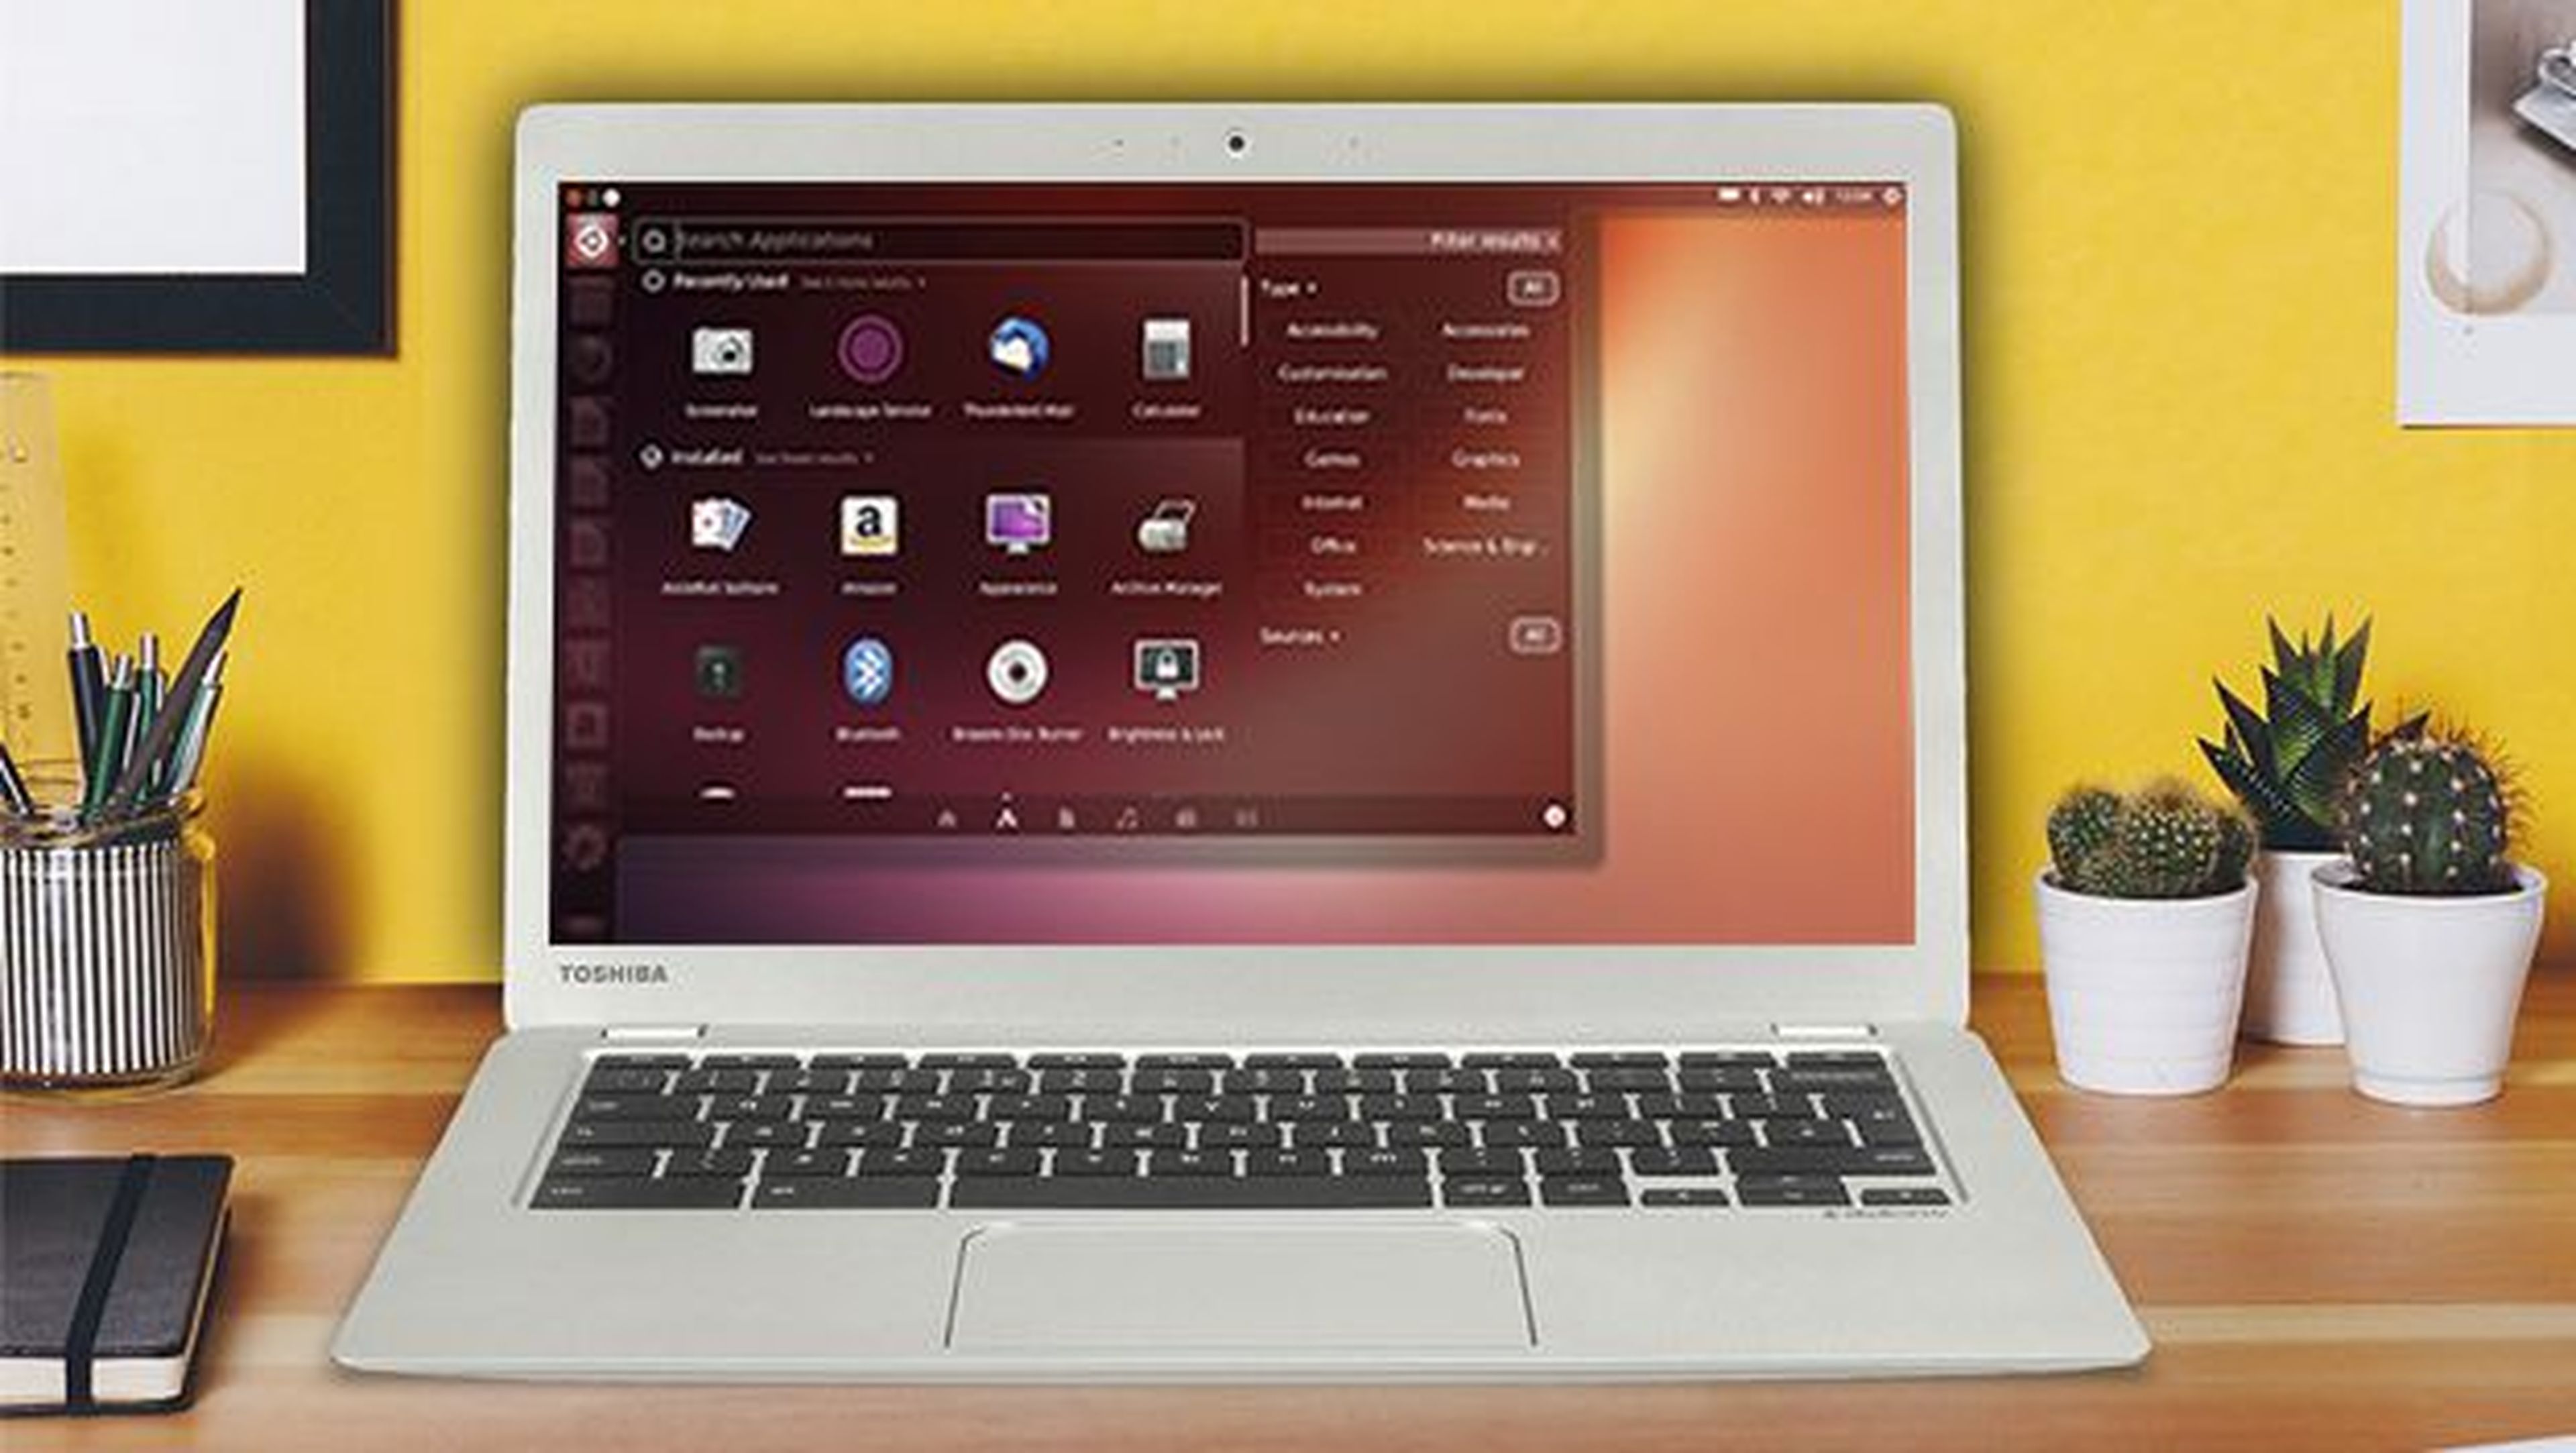 Portátil con Ubuntu Linux